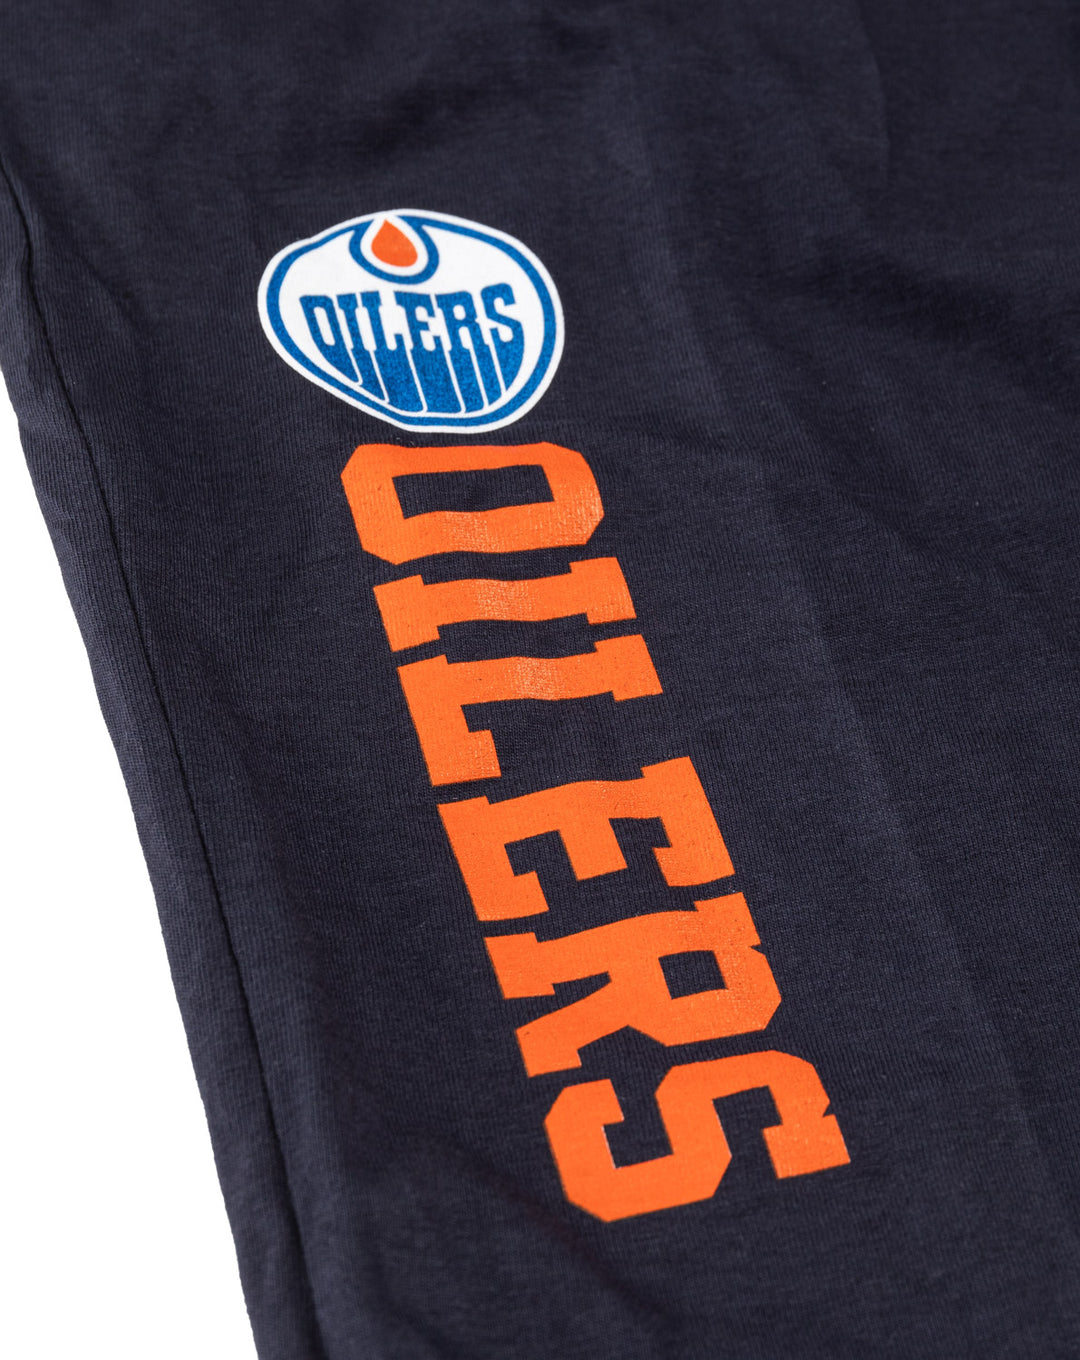 Edmonton Oilers Men's Cotton Jersey Pants